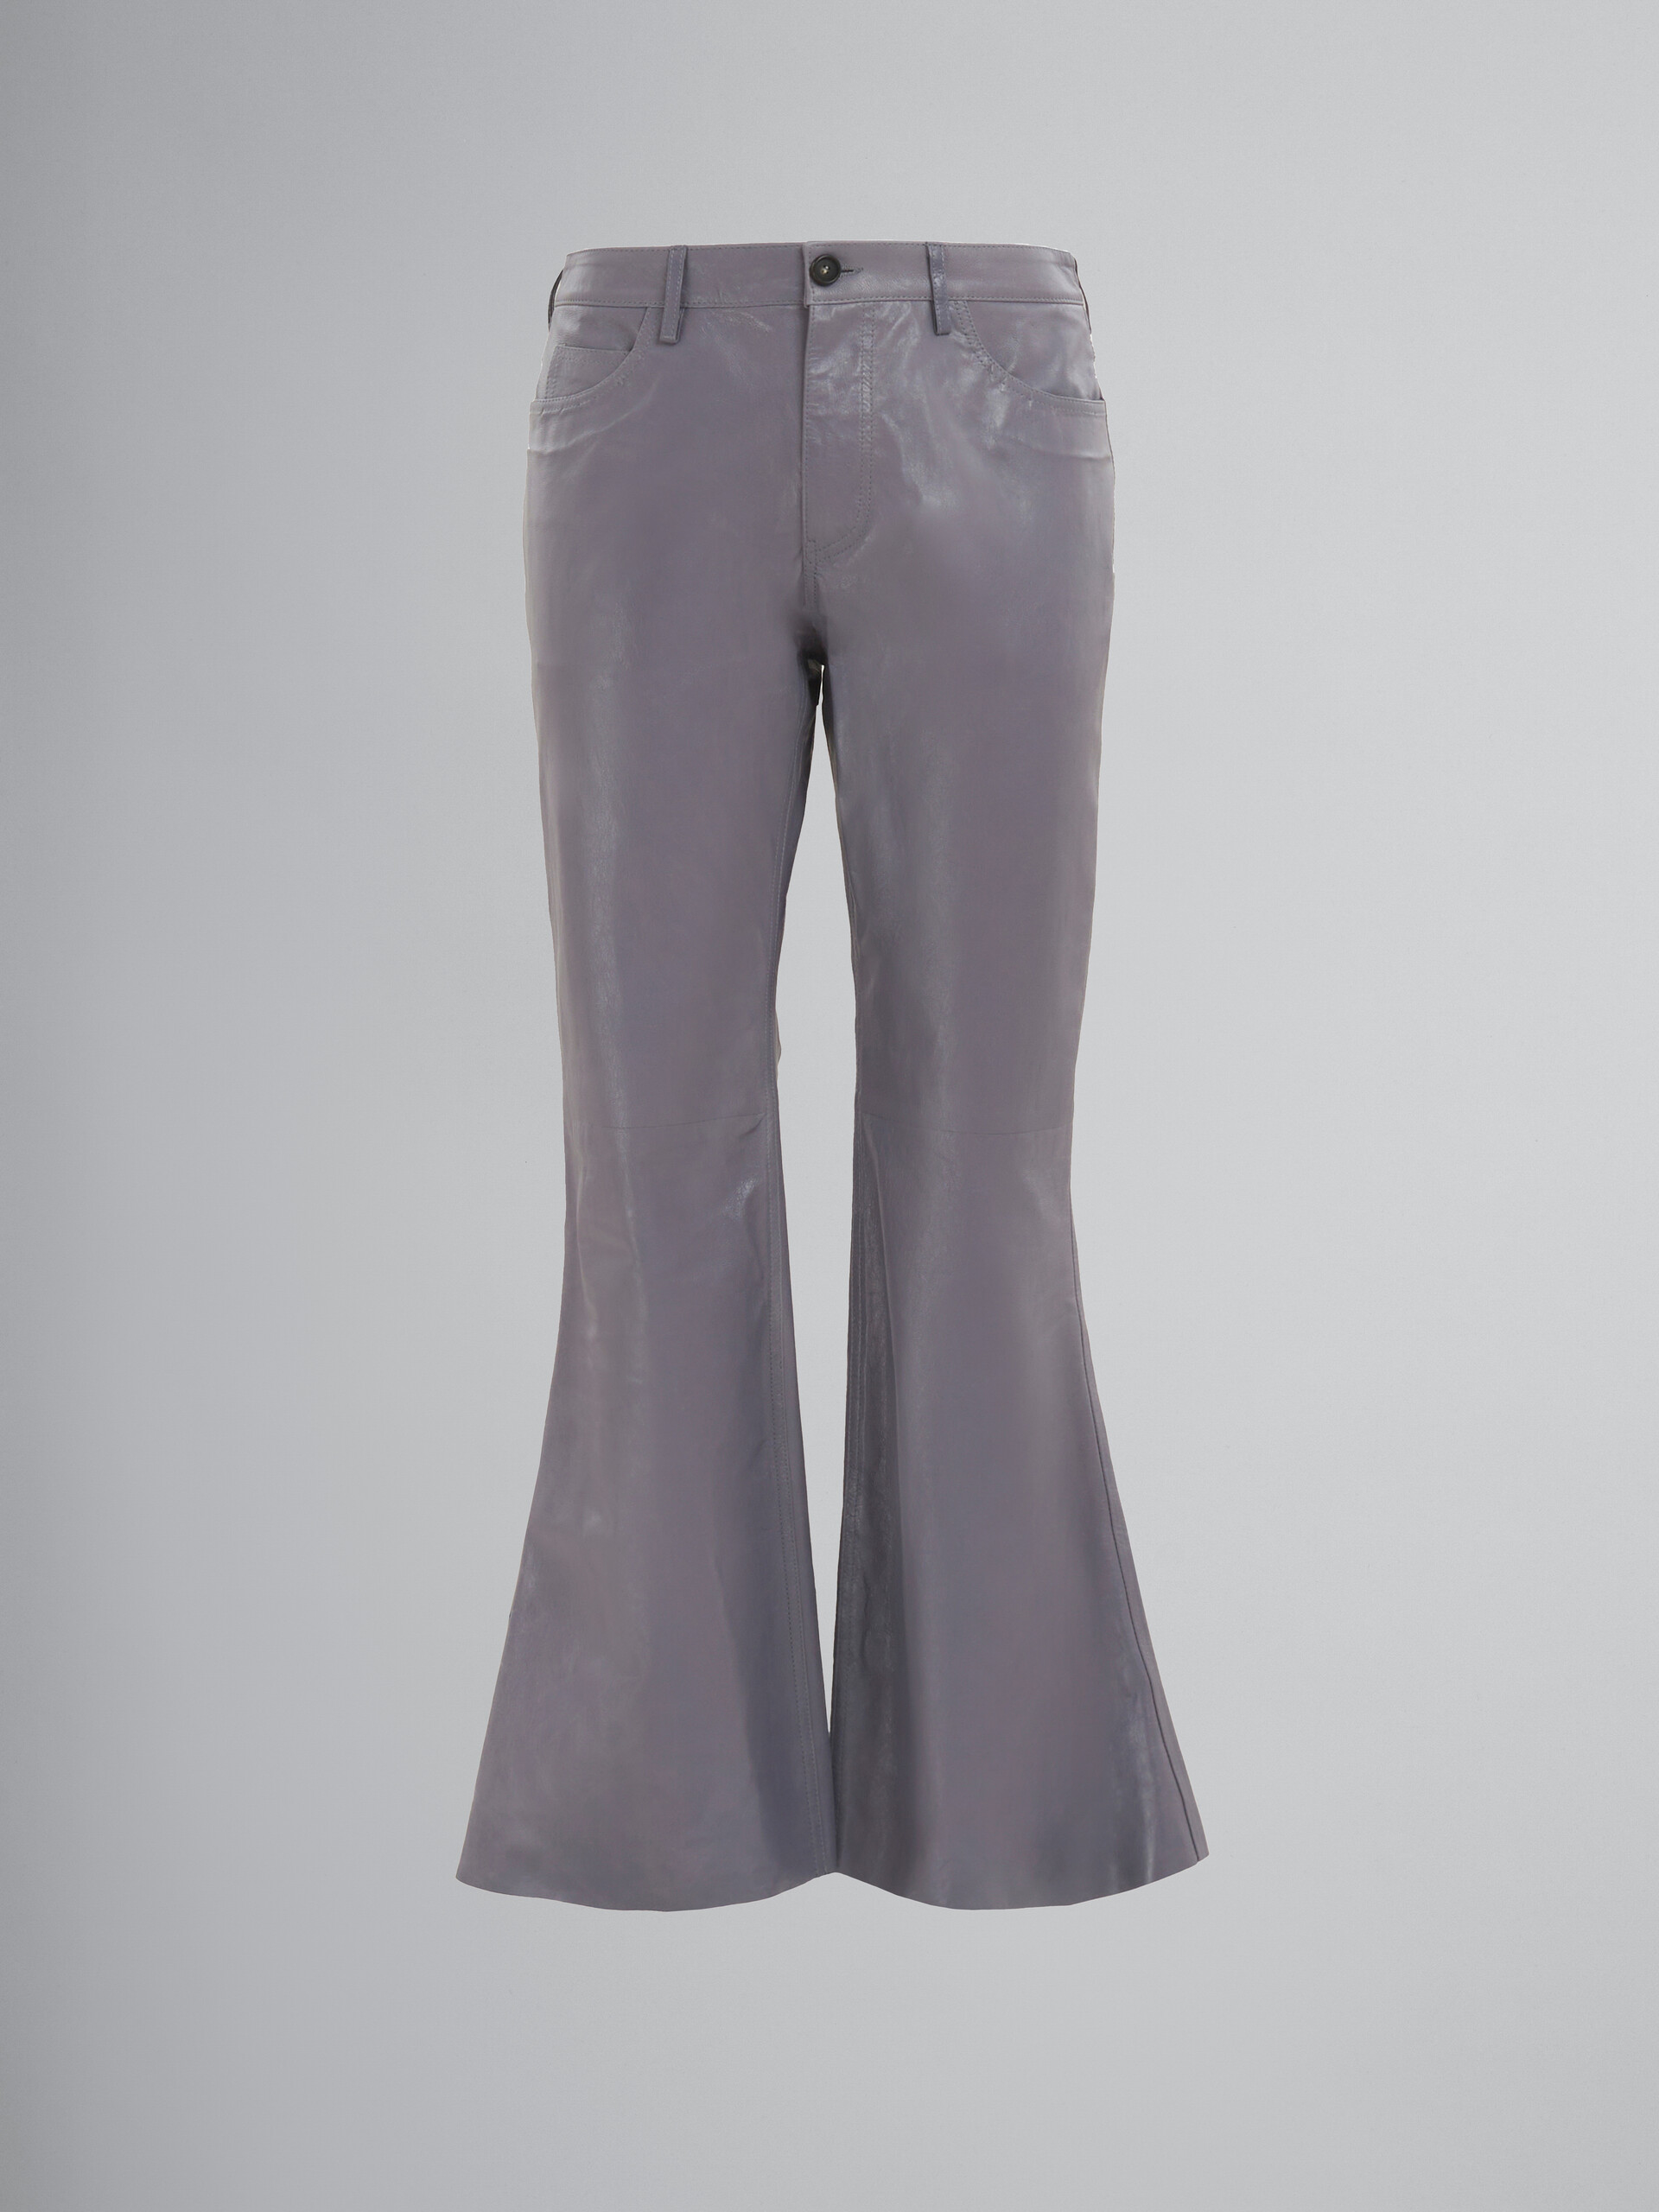 Pantaloni svasati in pelle grigia lucida - Pantaloni - Image 1